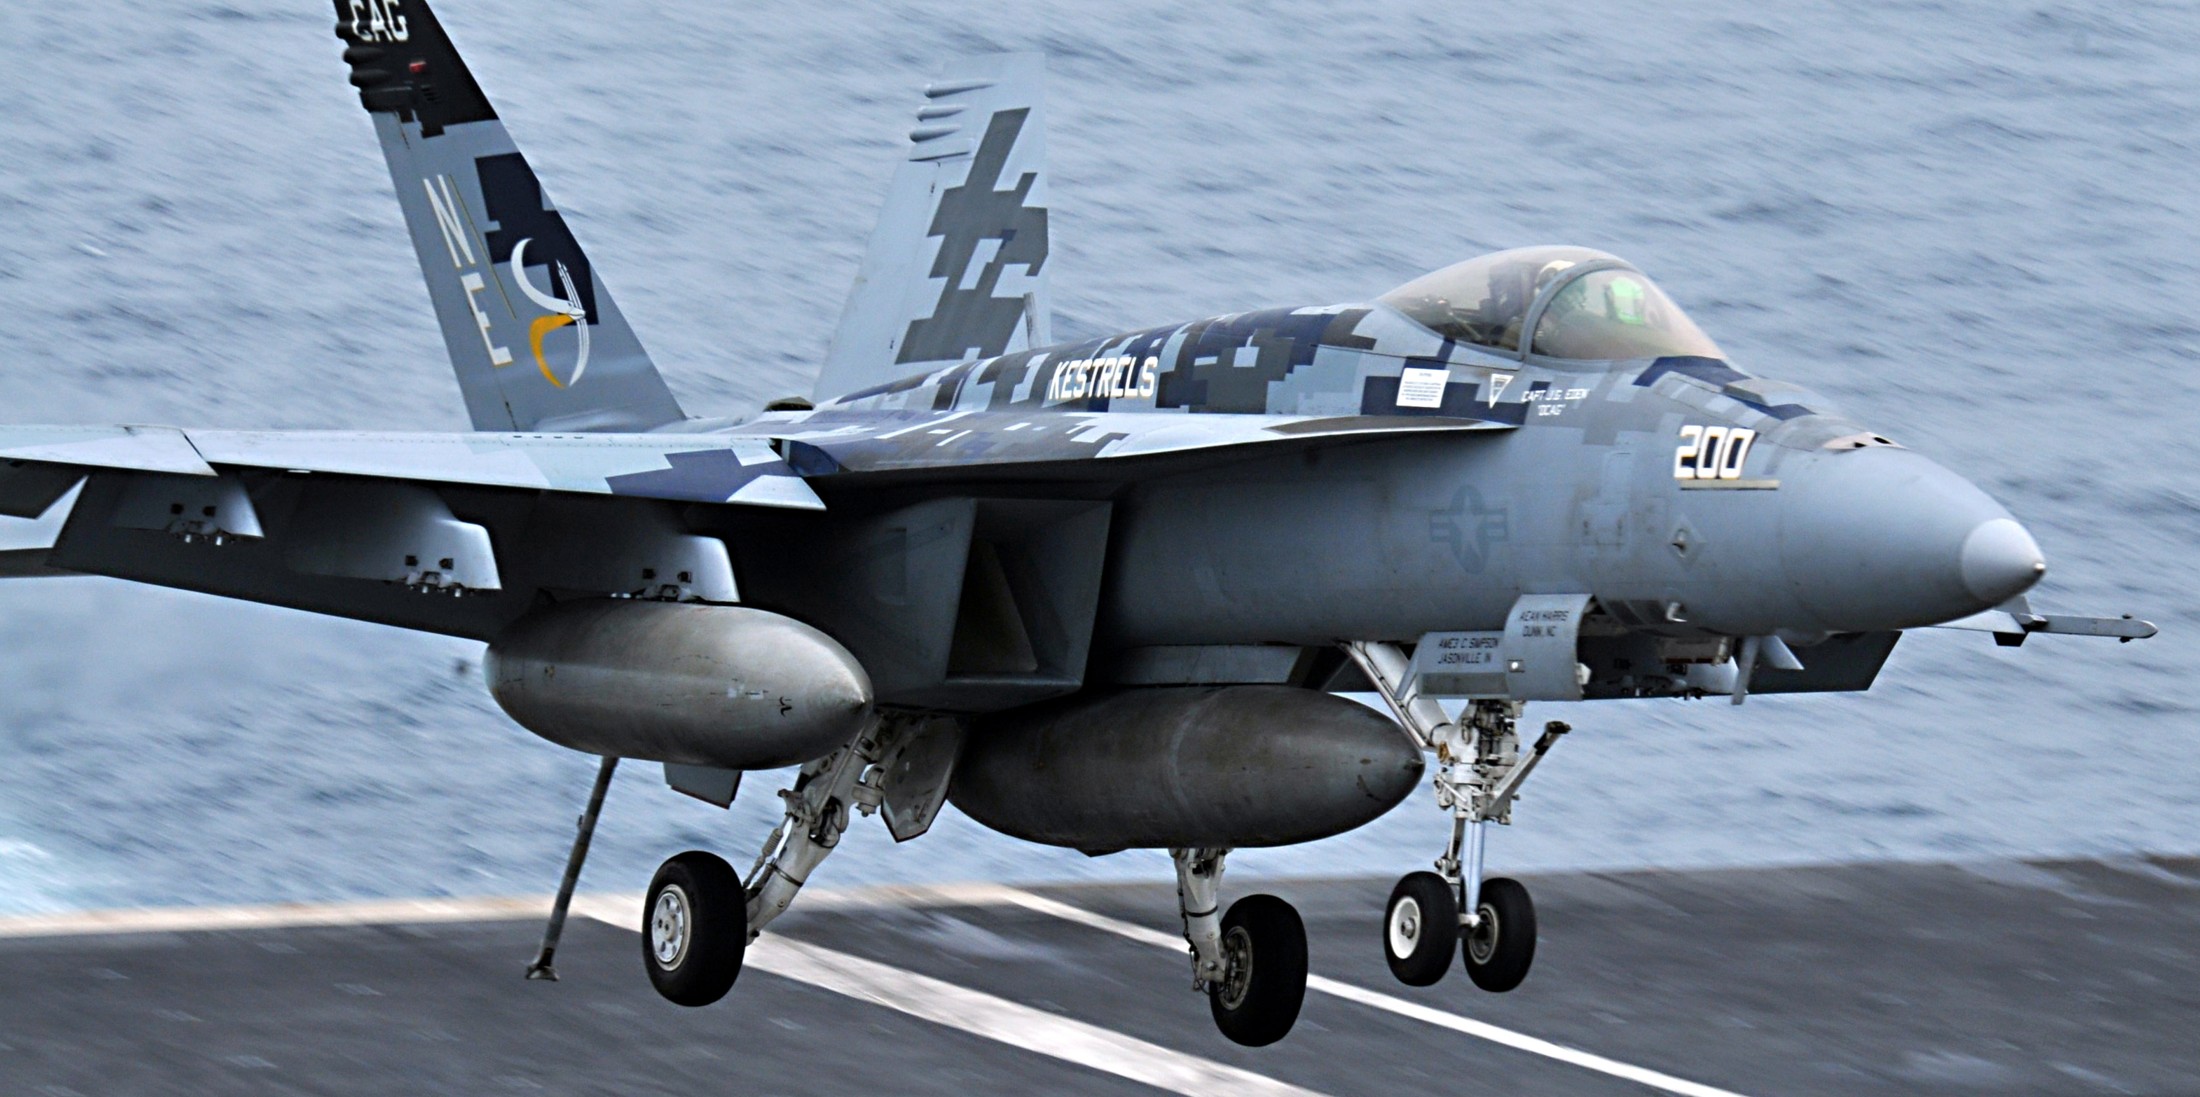 vfa-137 kestrels strike fighter squadron f/a-18e super hornet cvw-2 uss abraham lincoln cvn-72 2010 46